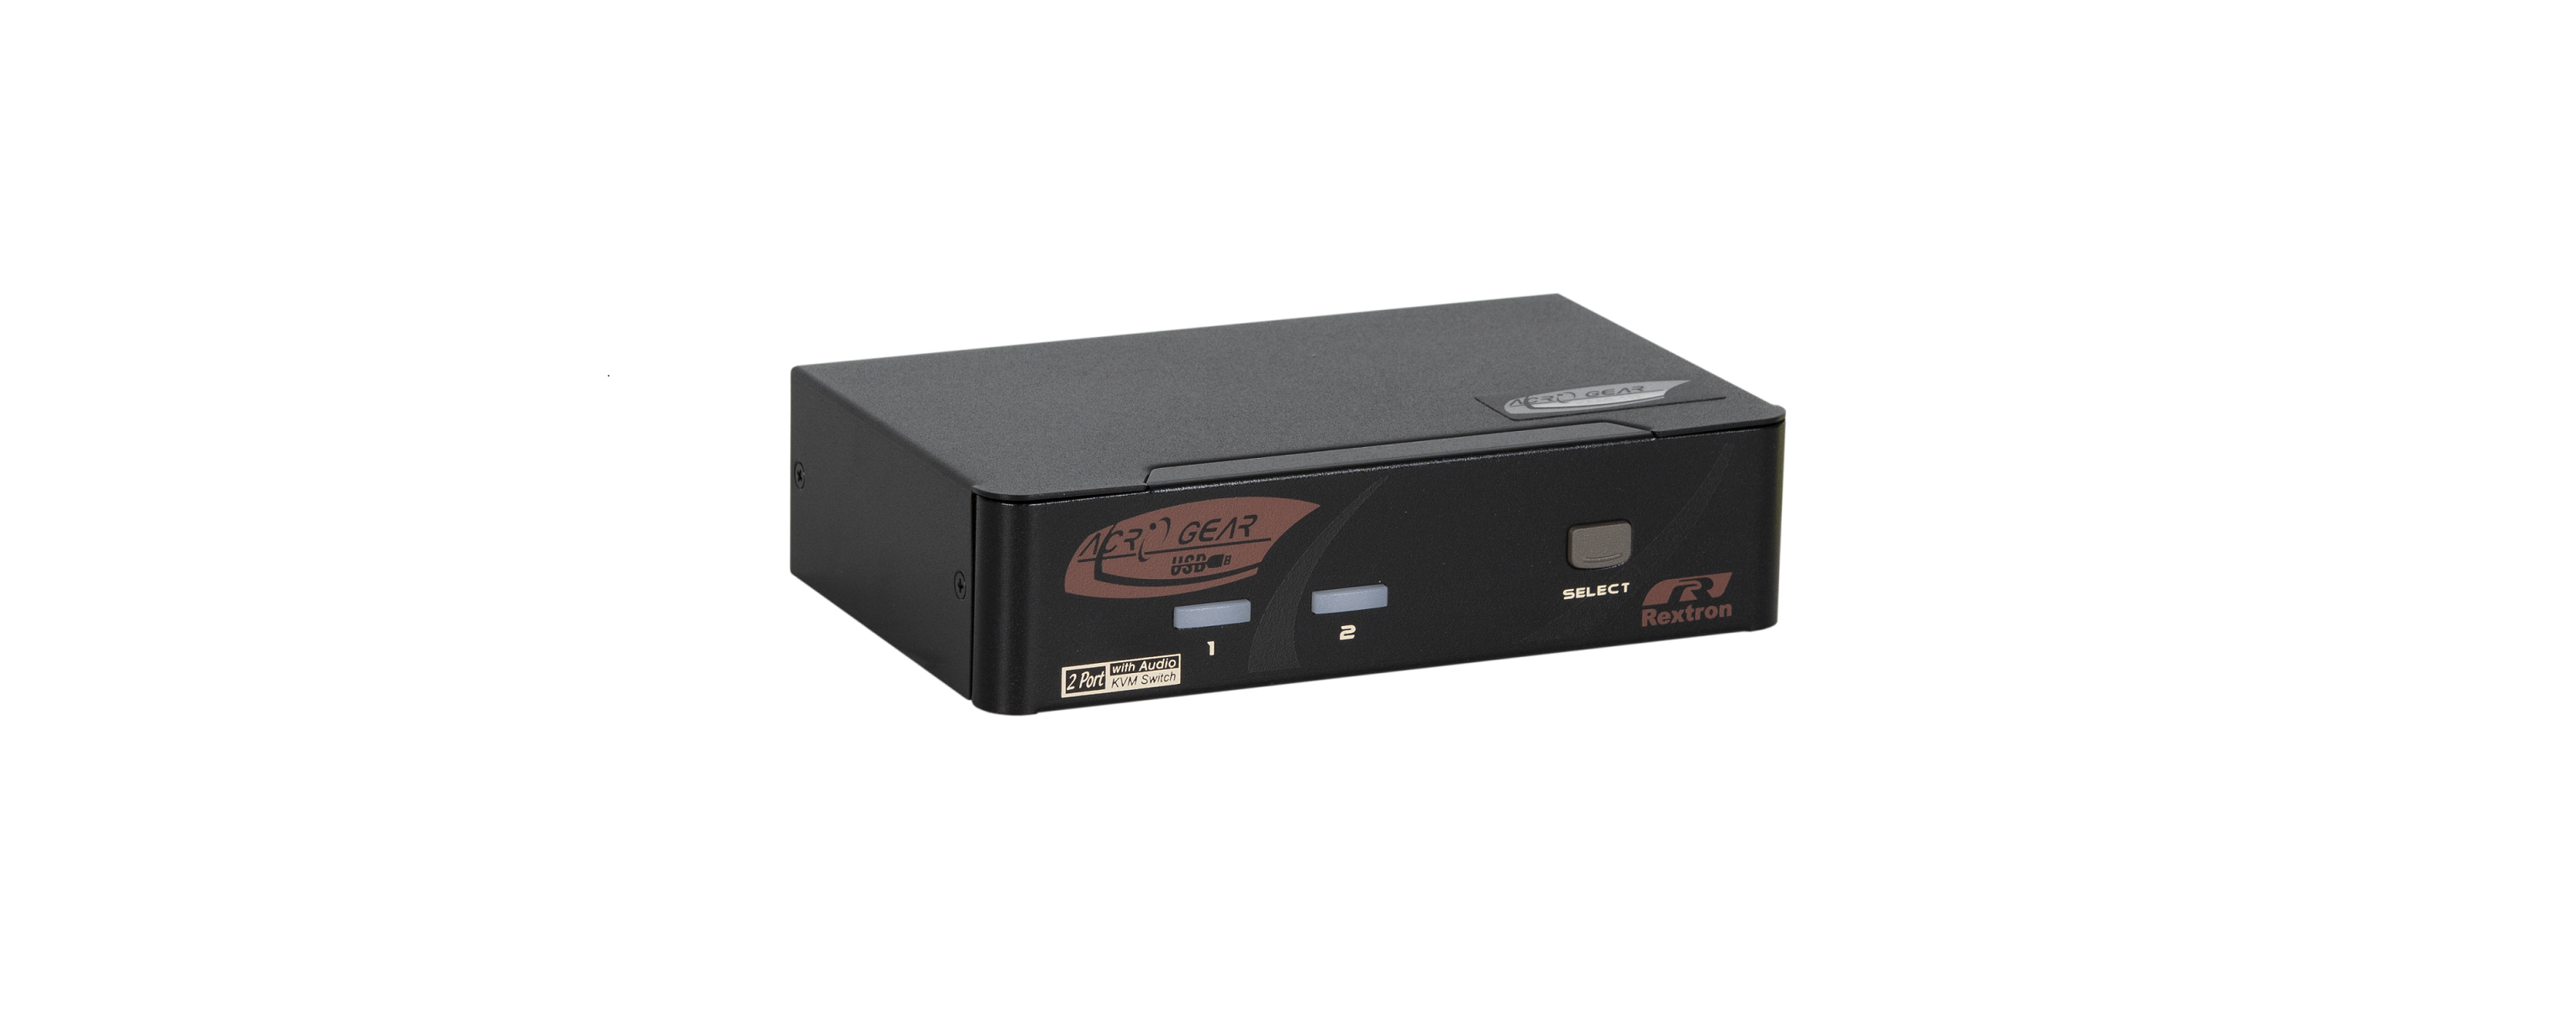 KVM-переключатель, 2-портовый, VGA, USB, USB-консоль (1920х1200), аудио KAAG-112